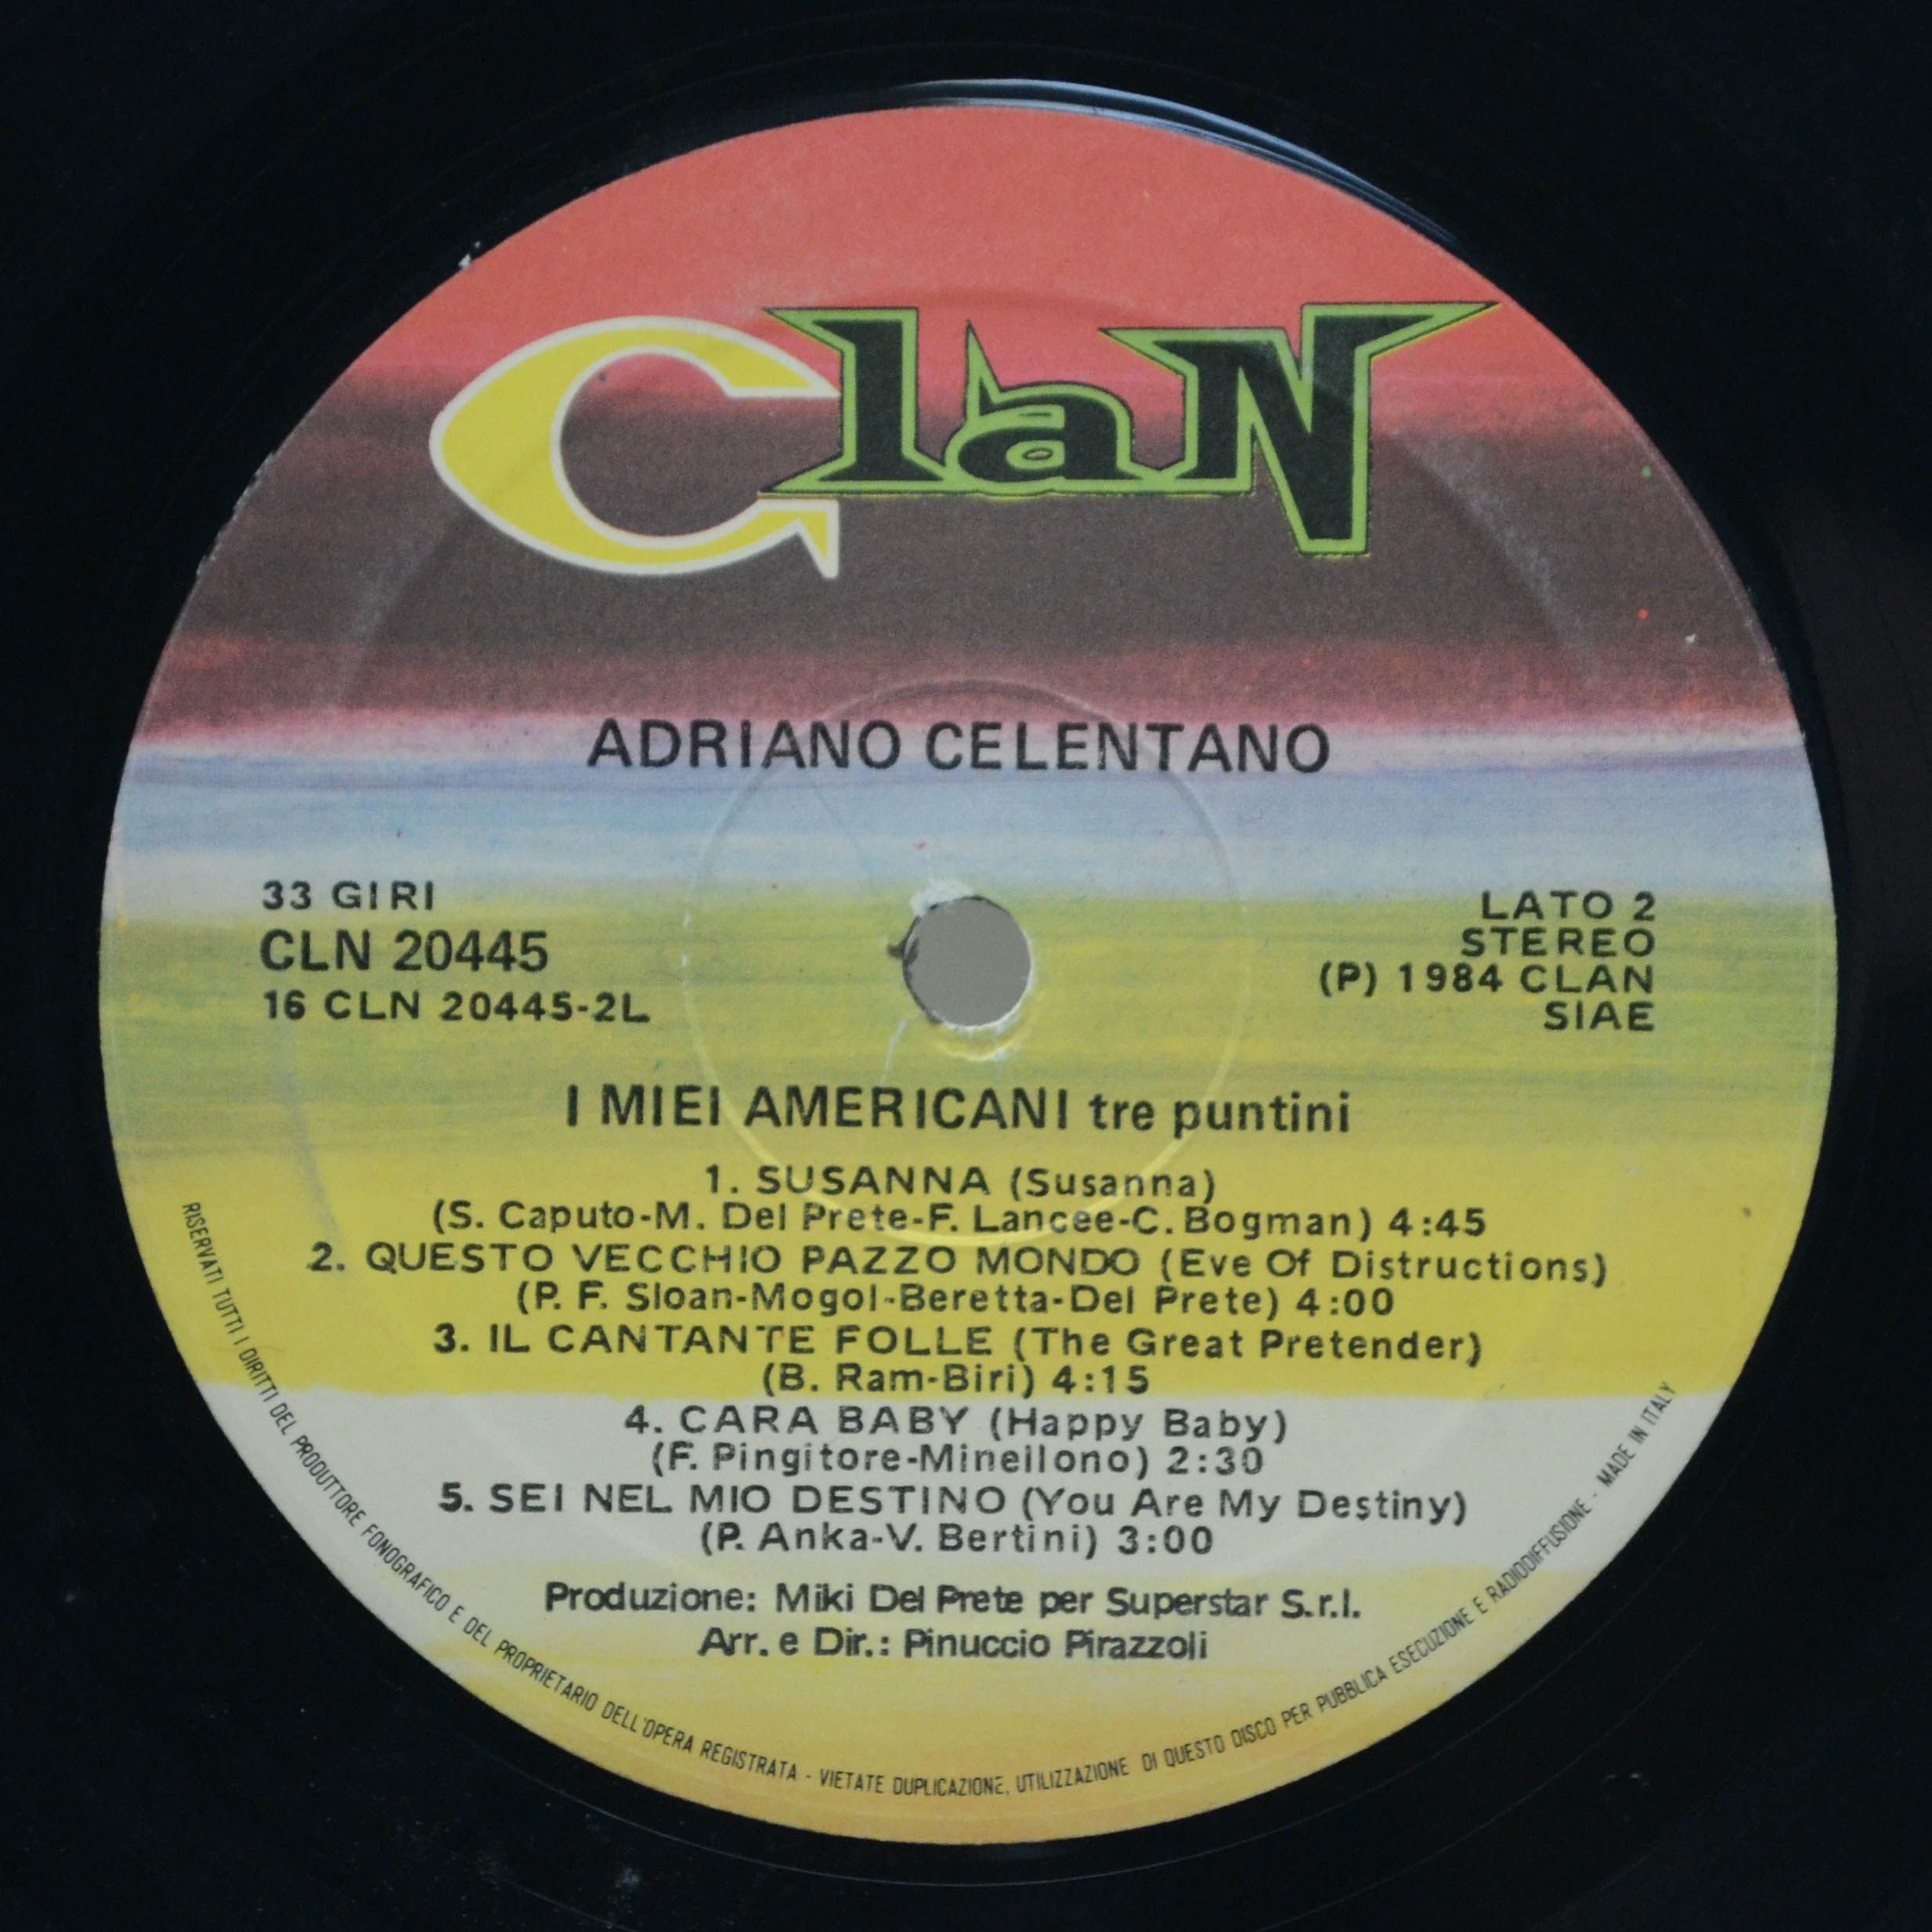 Adriano Celentano — I Miei Americani (Tre Puntini) (1-st, Italy, Clan), 1984